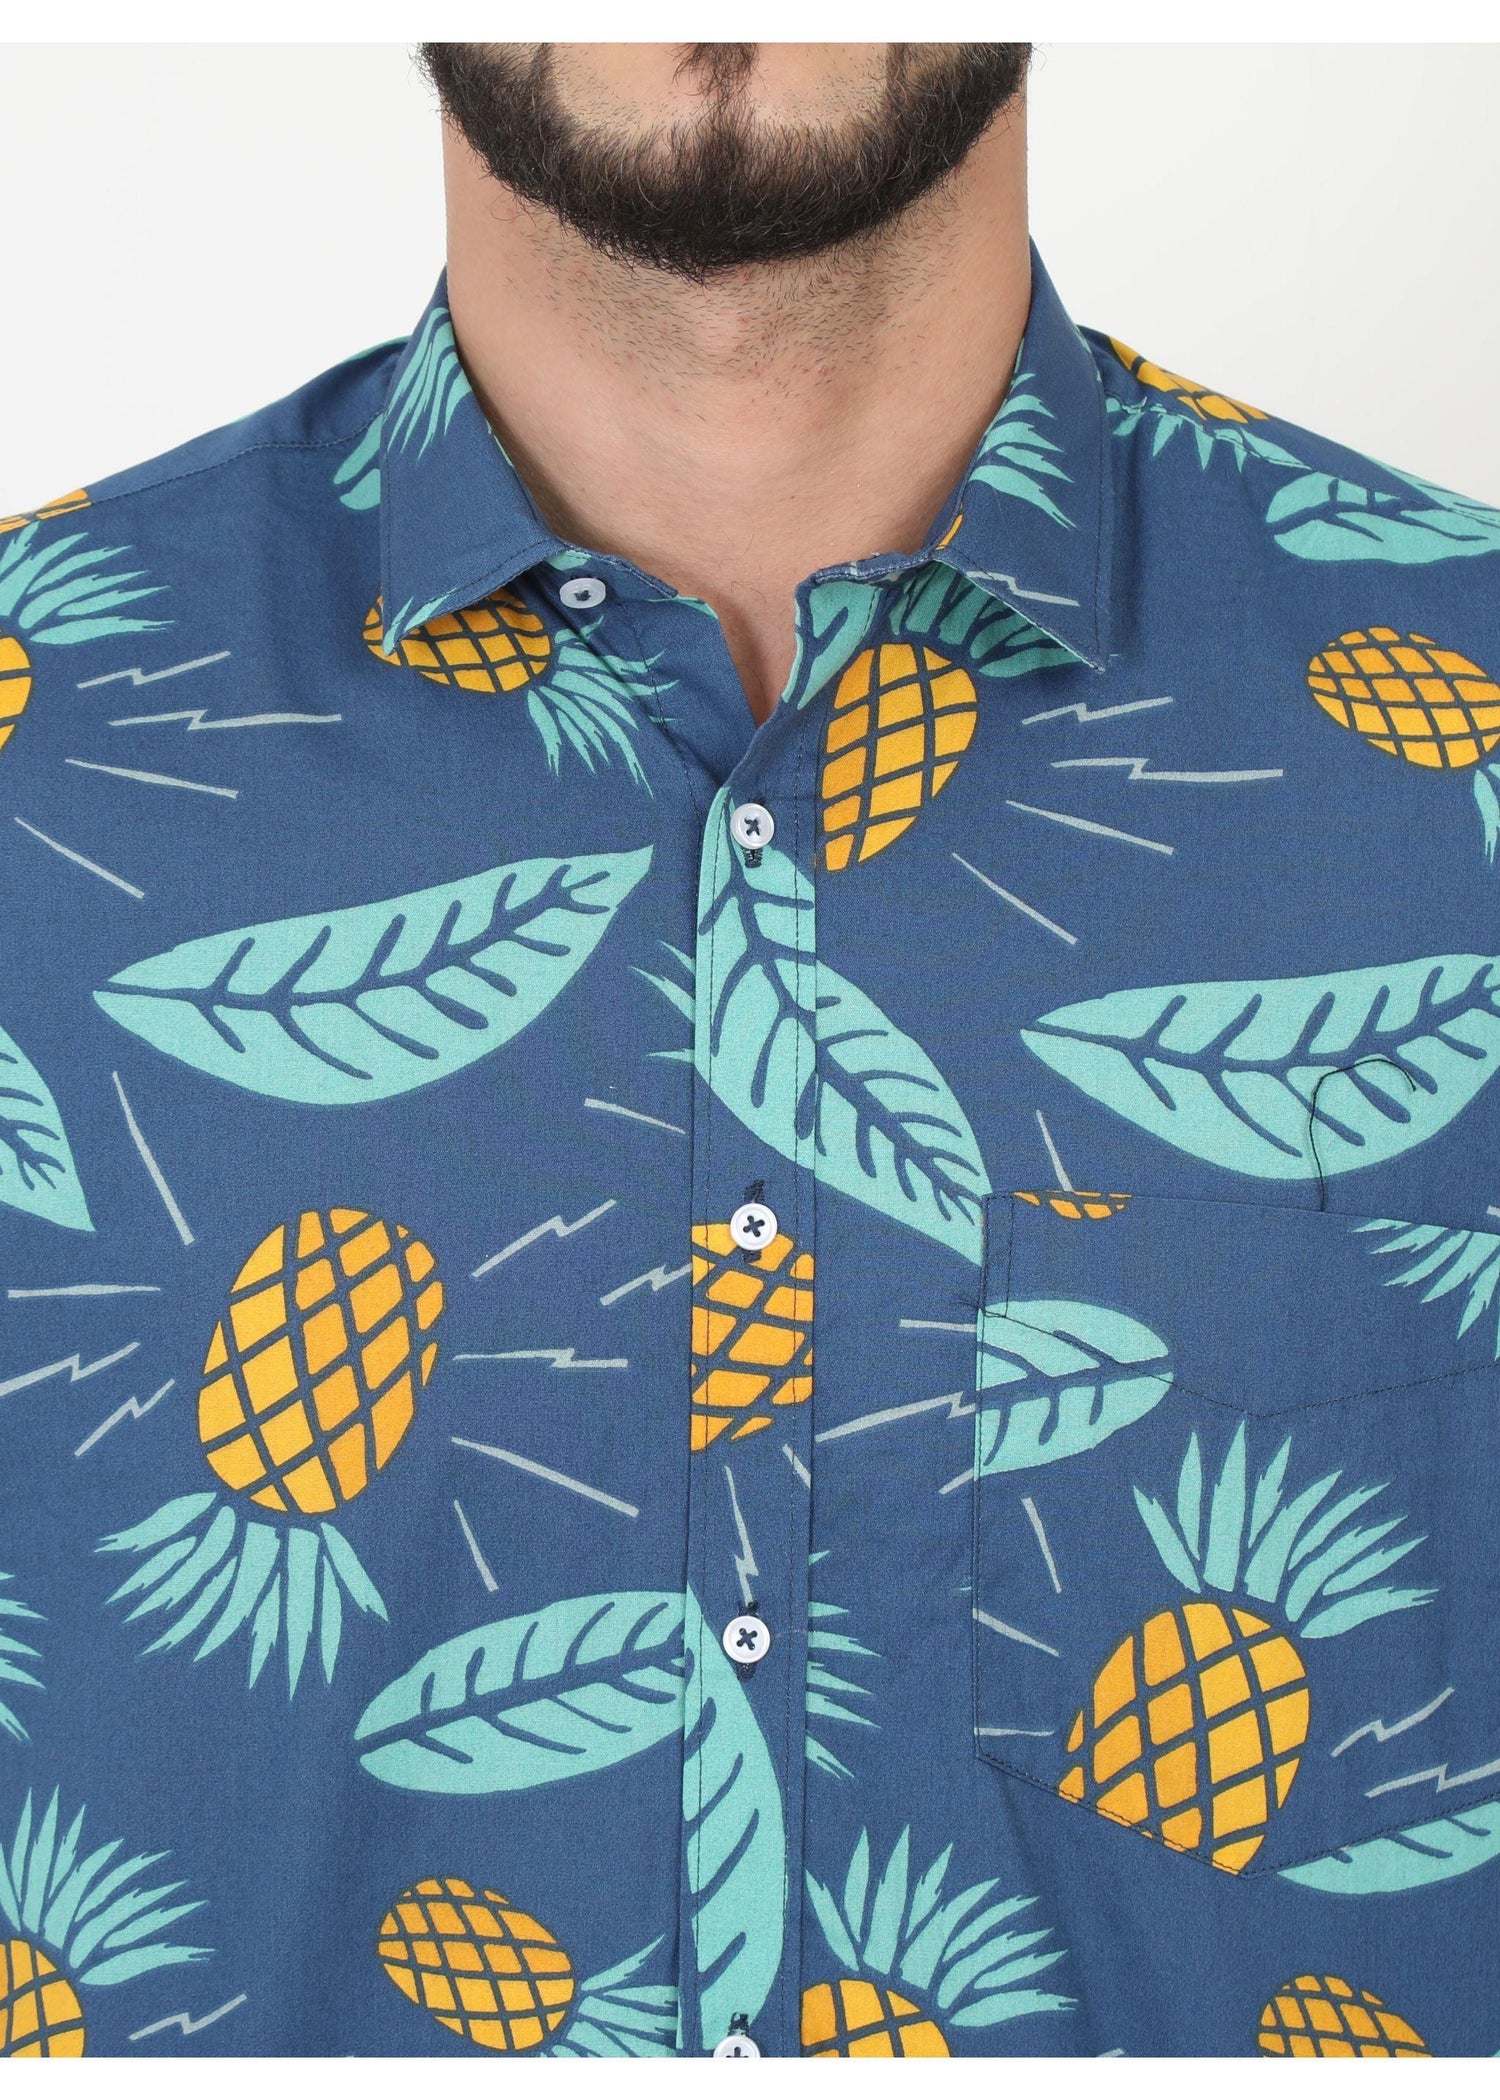 Tusok-blue-pineappleFeatured Shirt, Vacation-Printed Shirtimage-Blue Pineapple (5)